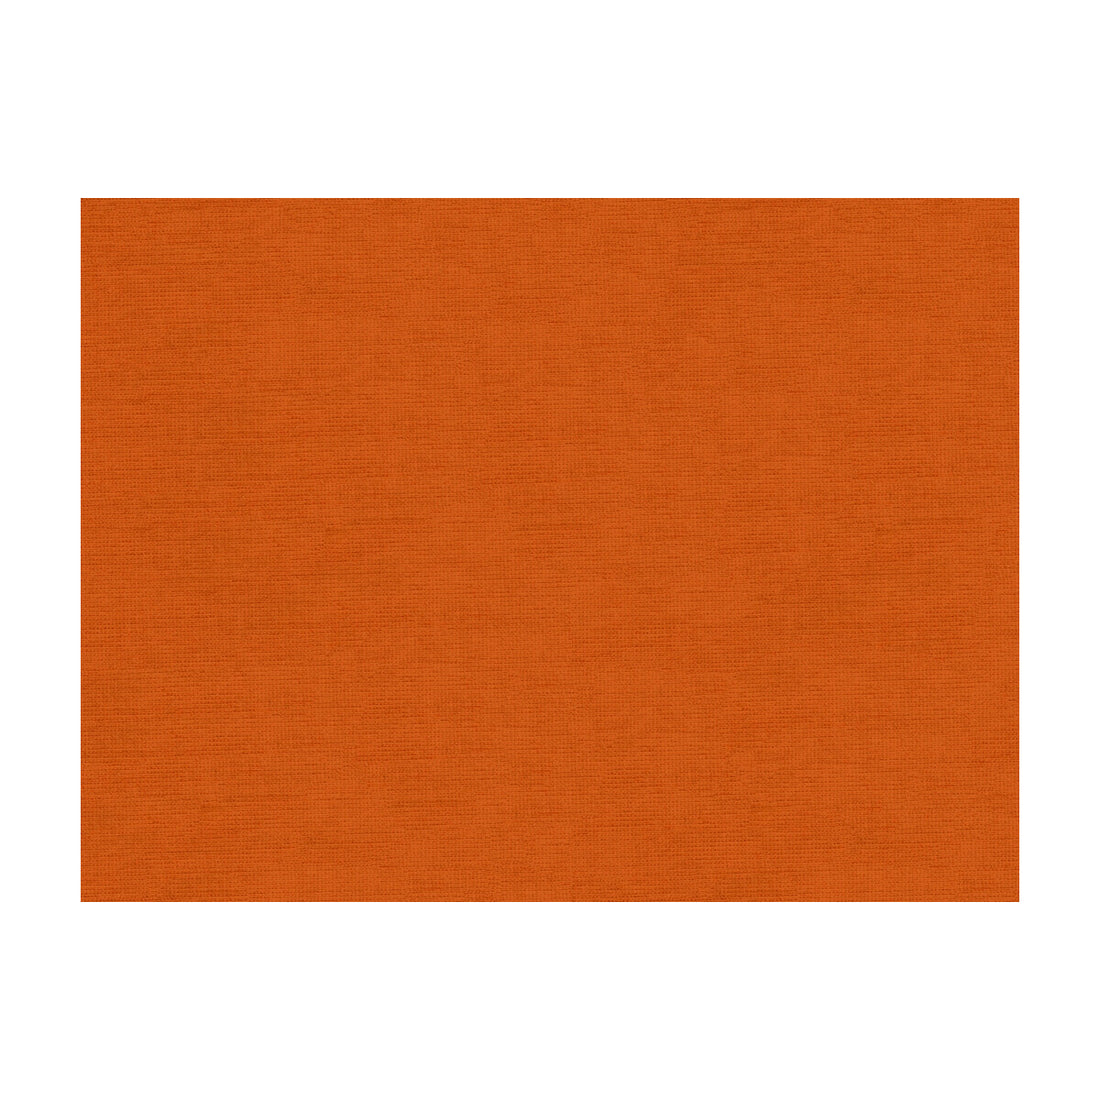 Charmant Velvet fabric in cognac color - pattern 8013150.1212.0 - by Brunschwig &amp; Fils